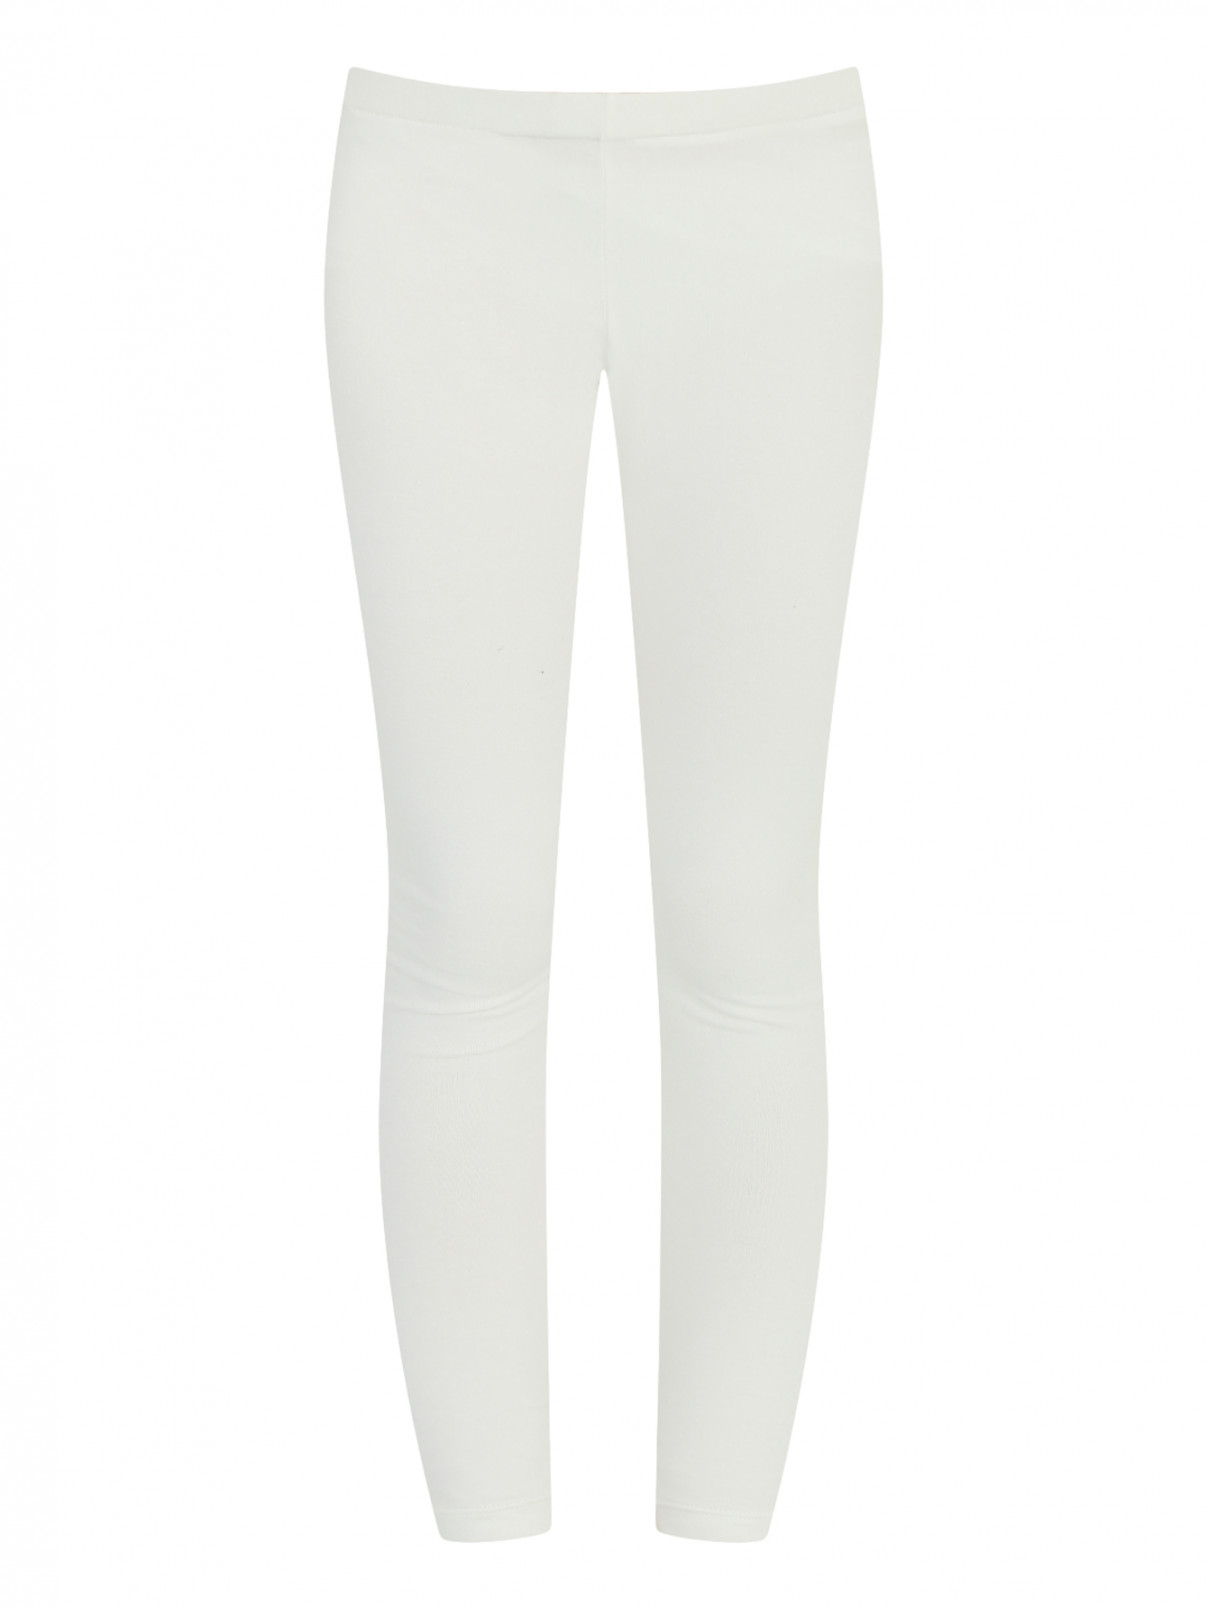 Легинсы из хлопка на резинке Aletta Couture  –  Общий вид  – Цвет:  Белый